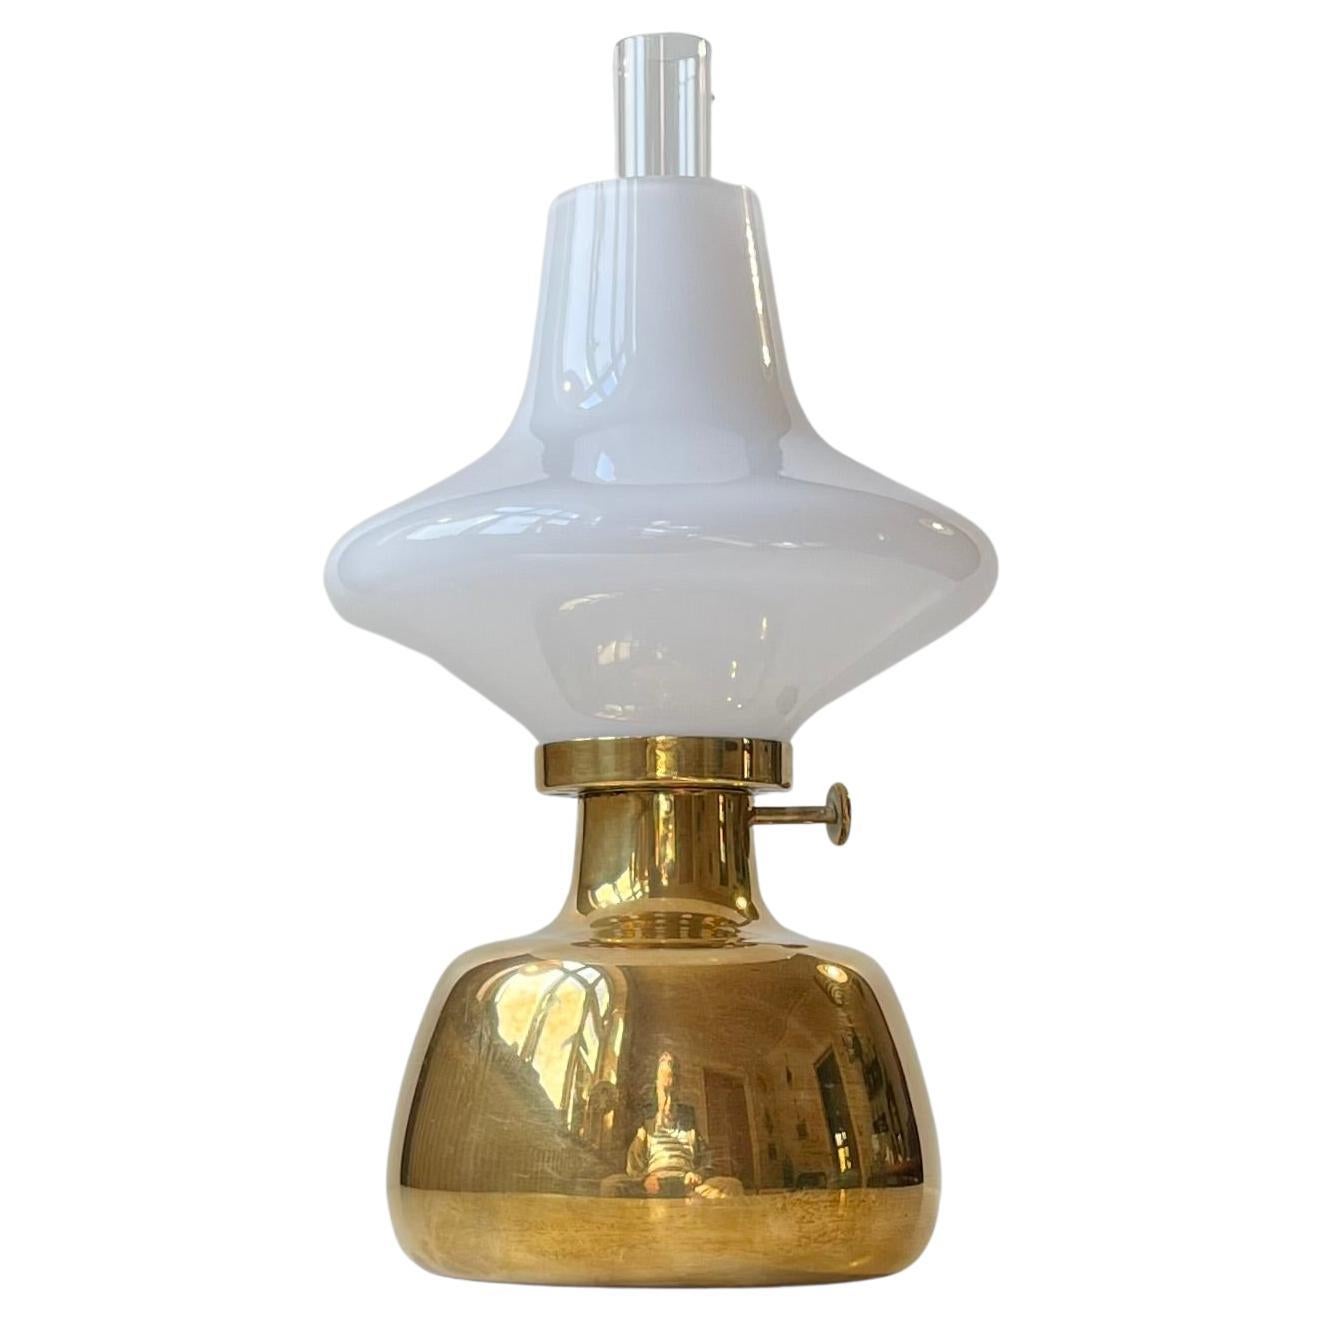 Henning Koppel Vintage Petronella Oil Table Lamp by Louis Poulsen For Sale